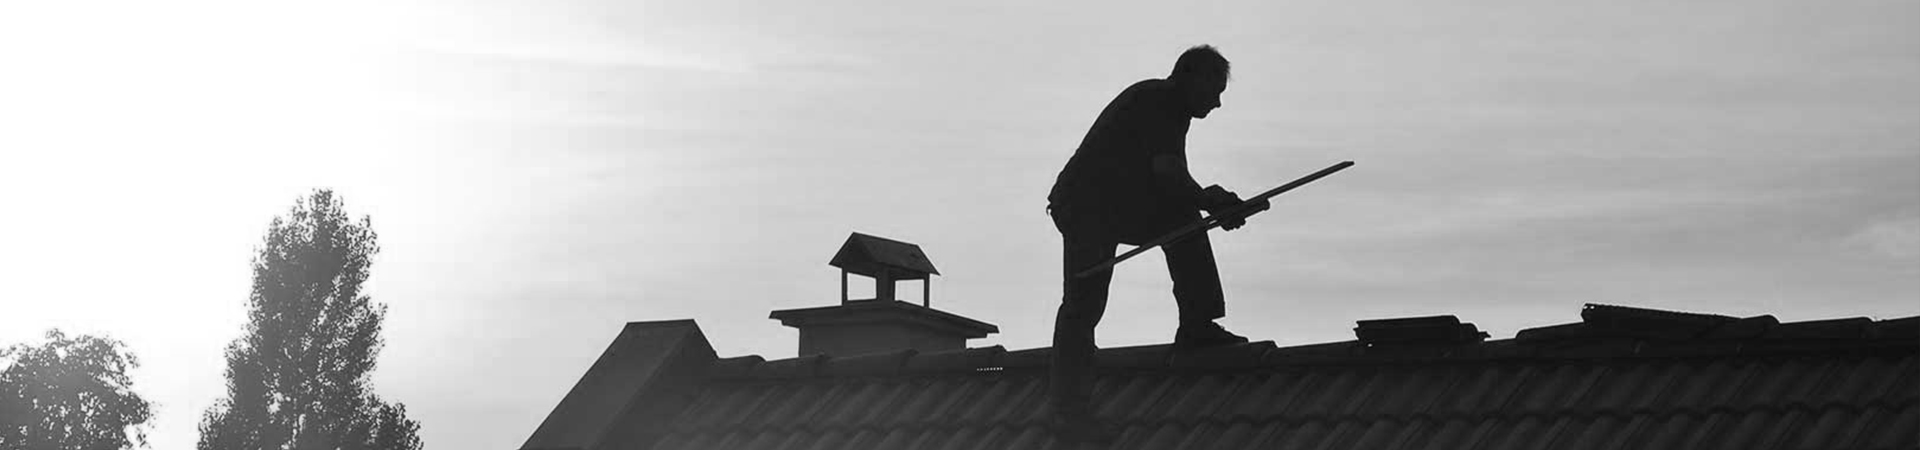 man-working-roofing-monterey-ca